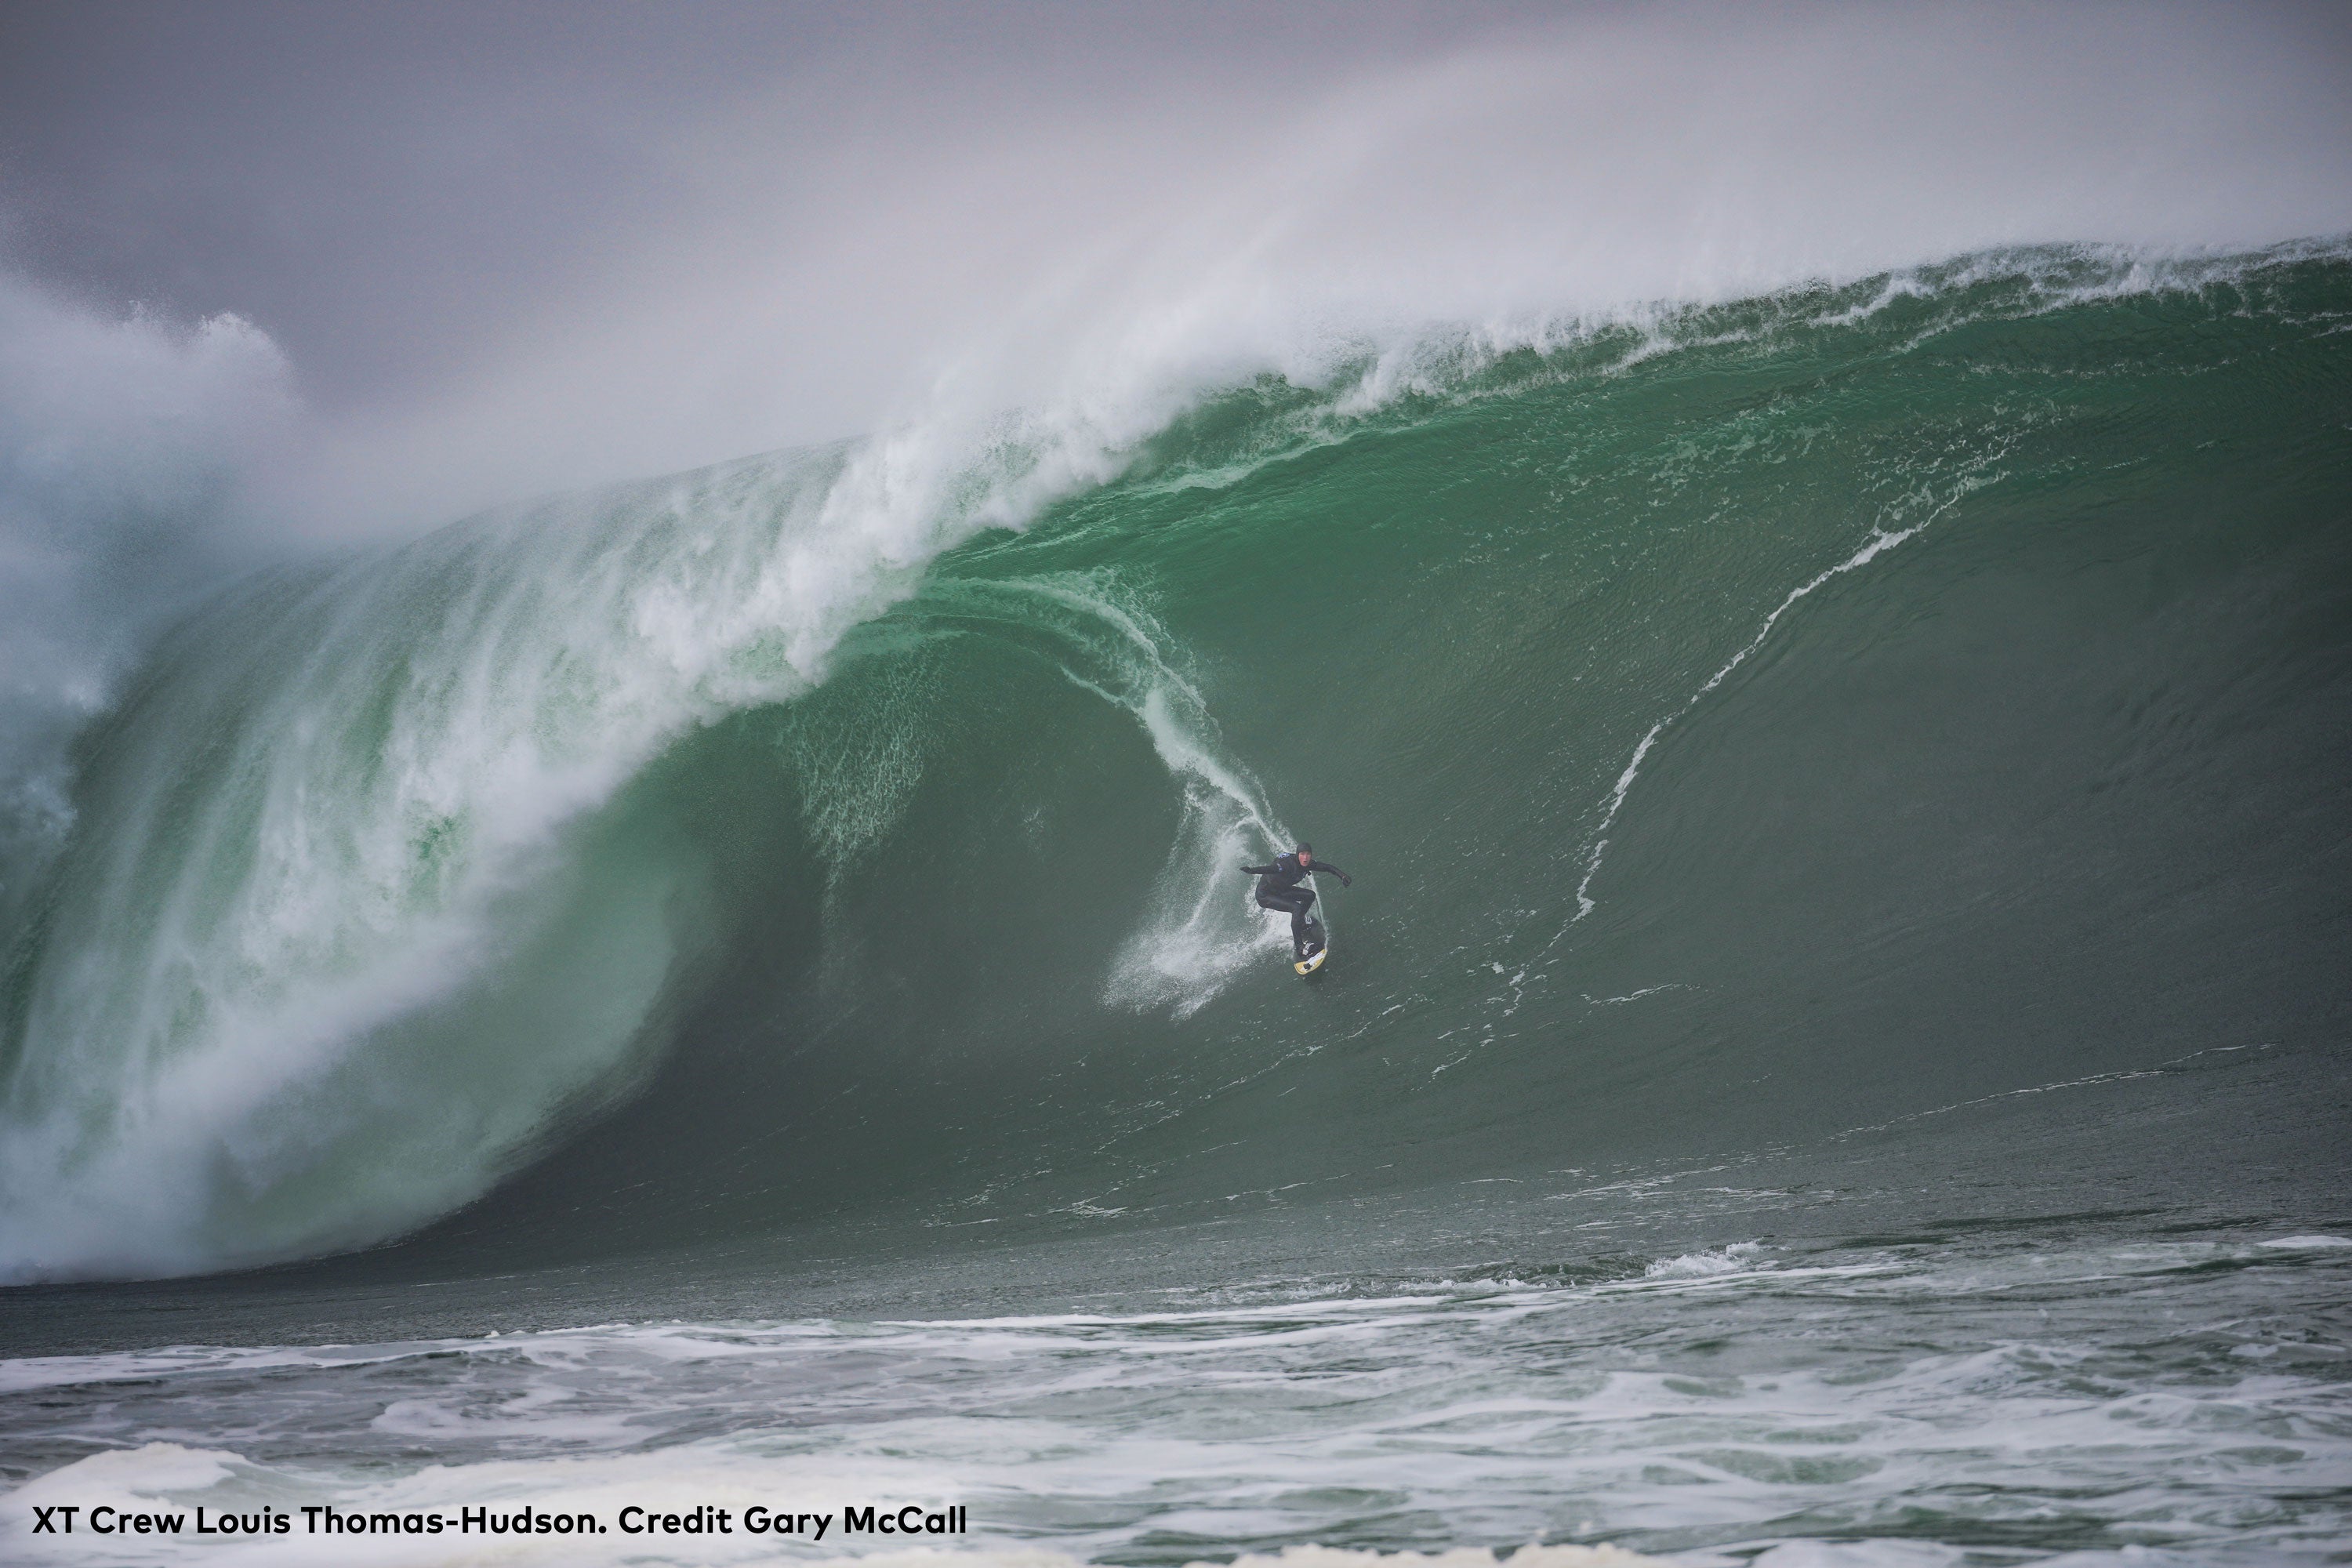 XT Crew Louis Thomas-Hudson surfing a large wave